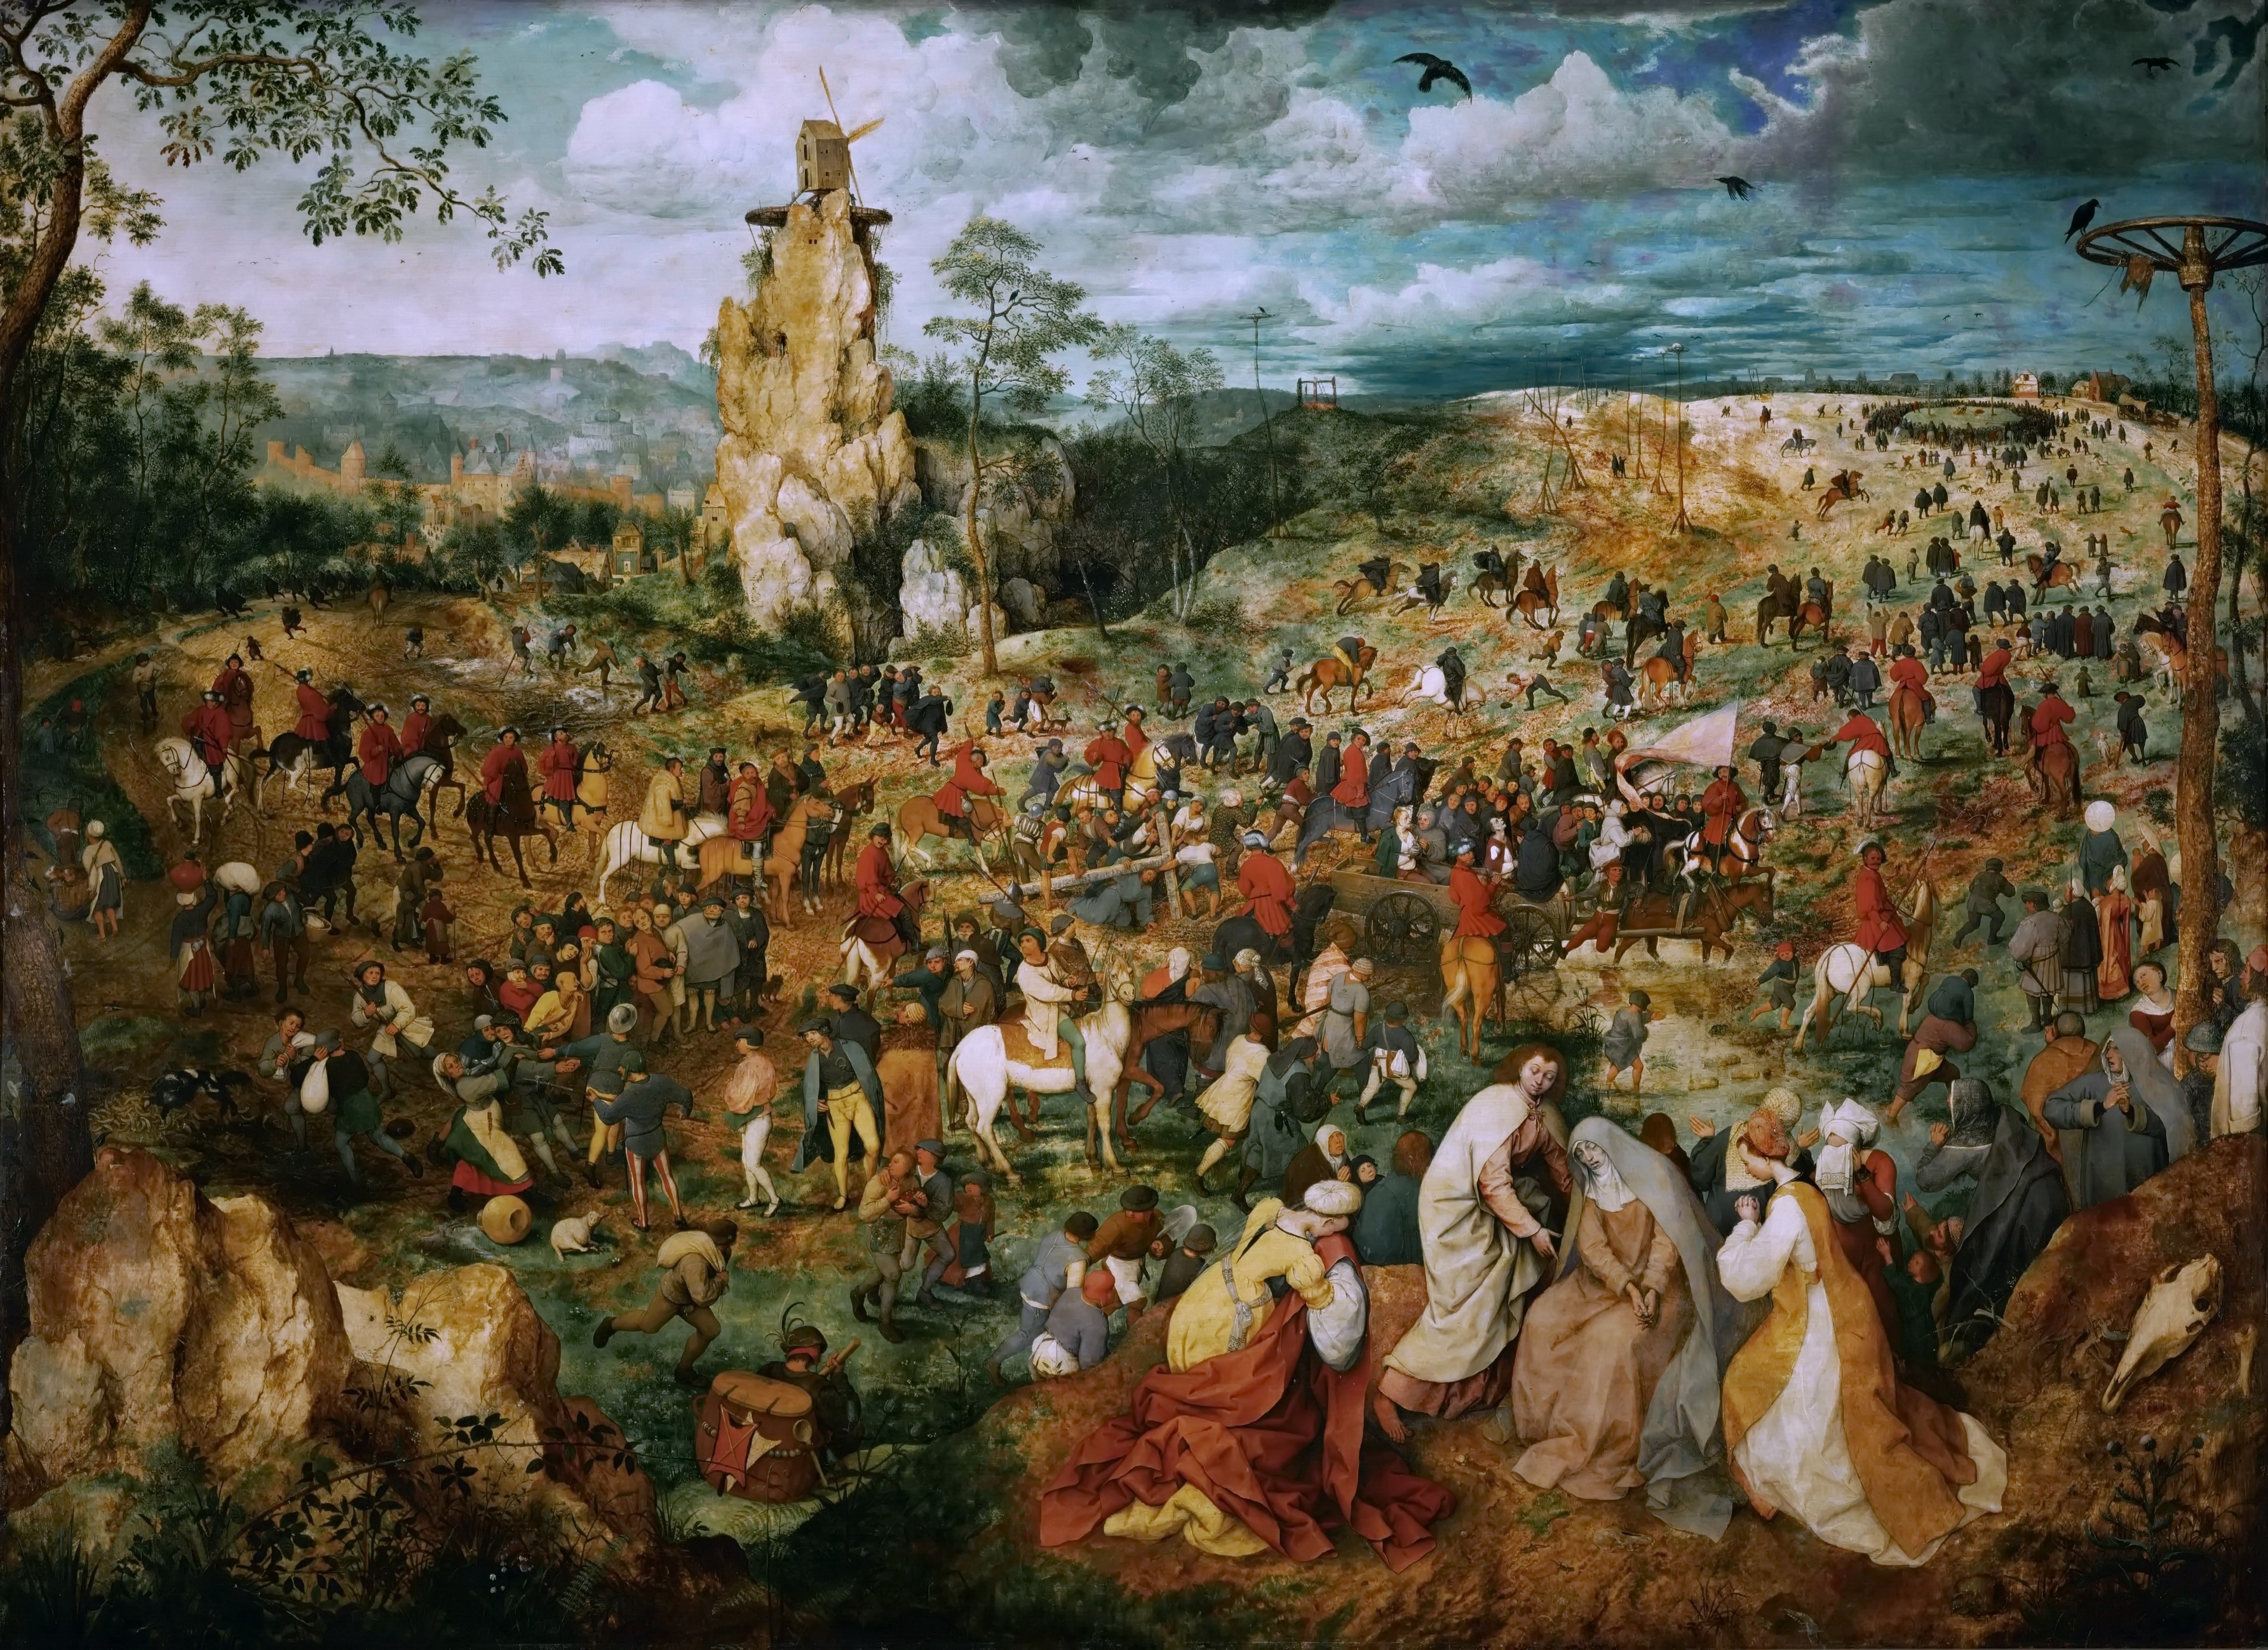 Pieter Bruegel (I) - The Procession to Calvary (1564)